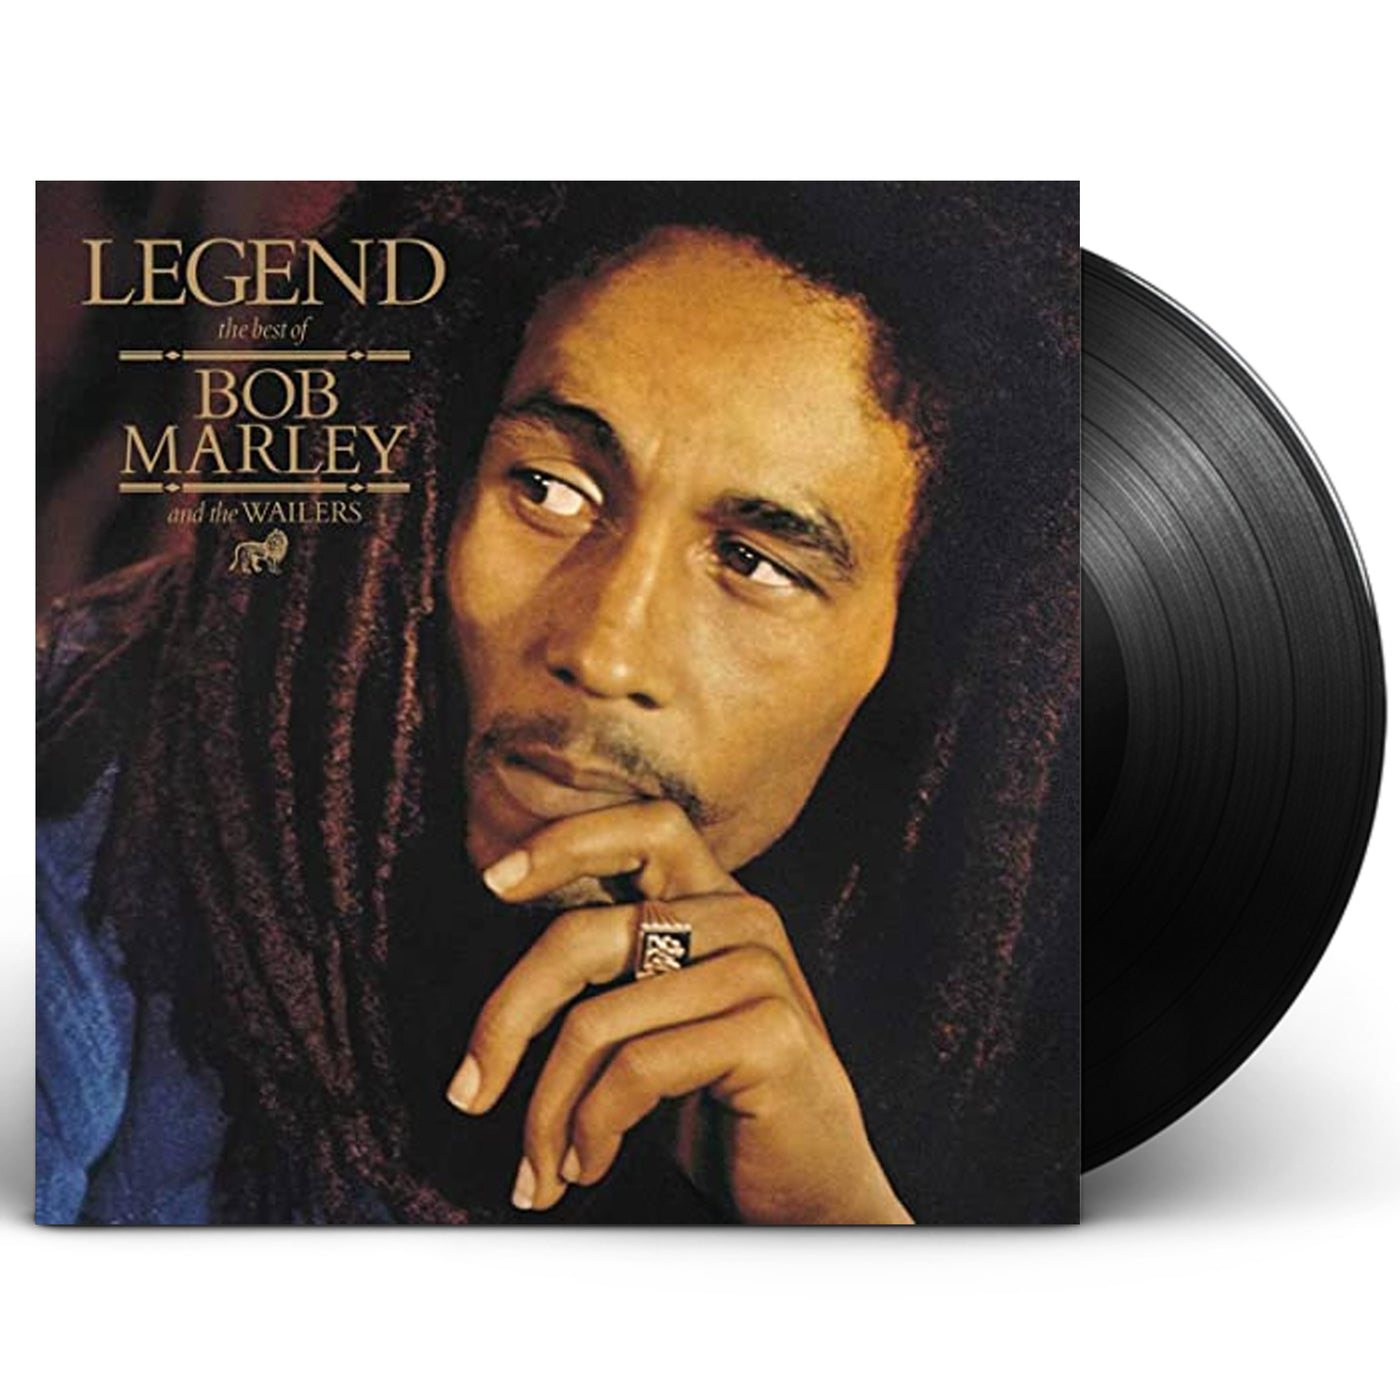 Bob Marley & The Wailers "Legend" LP Vinyl